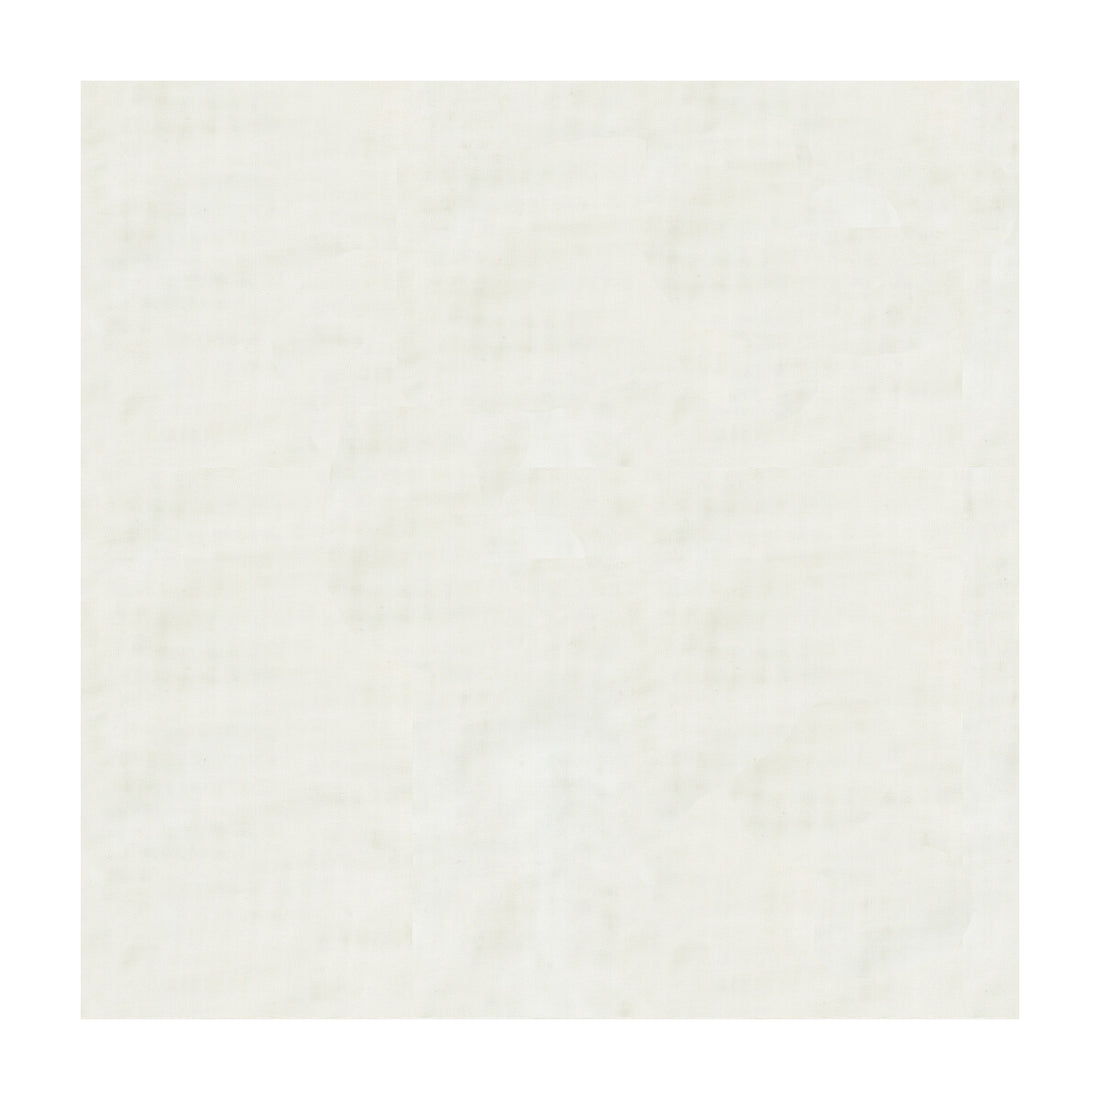 Kravet Basics fabric in 4108-101 color - pattern 4108.101.0 - by Kravet Basics in the Sheer Outlook collection